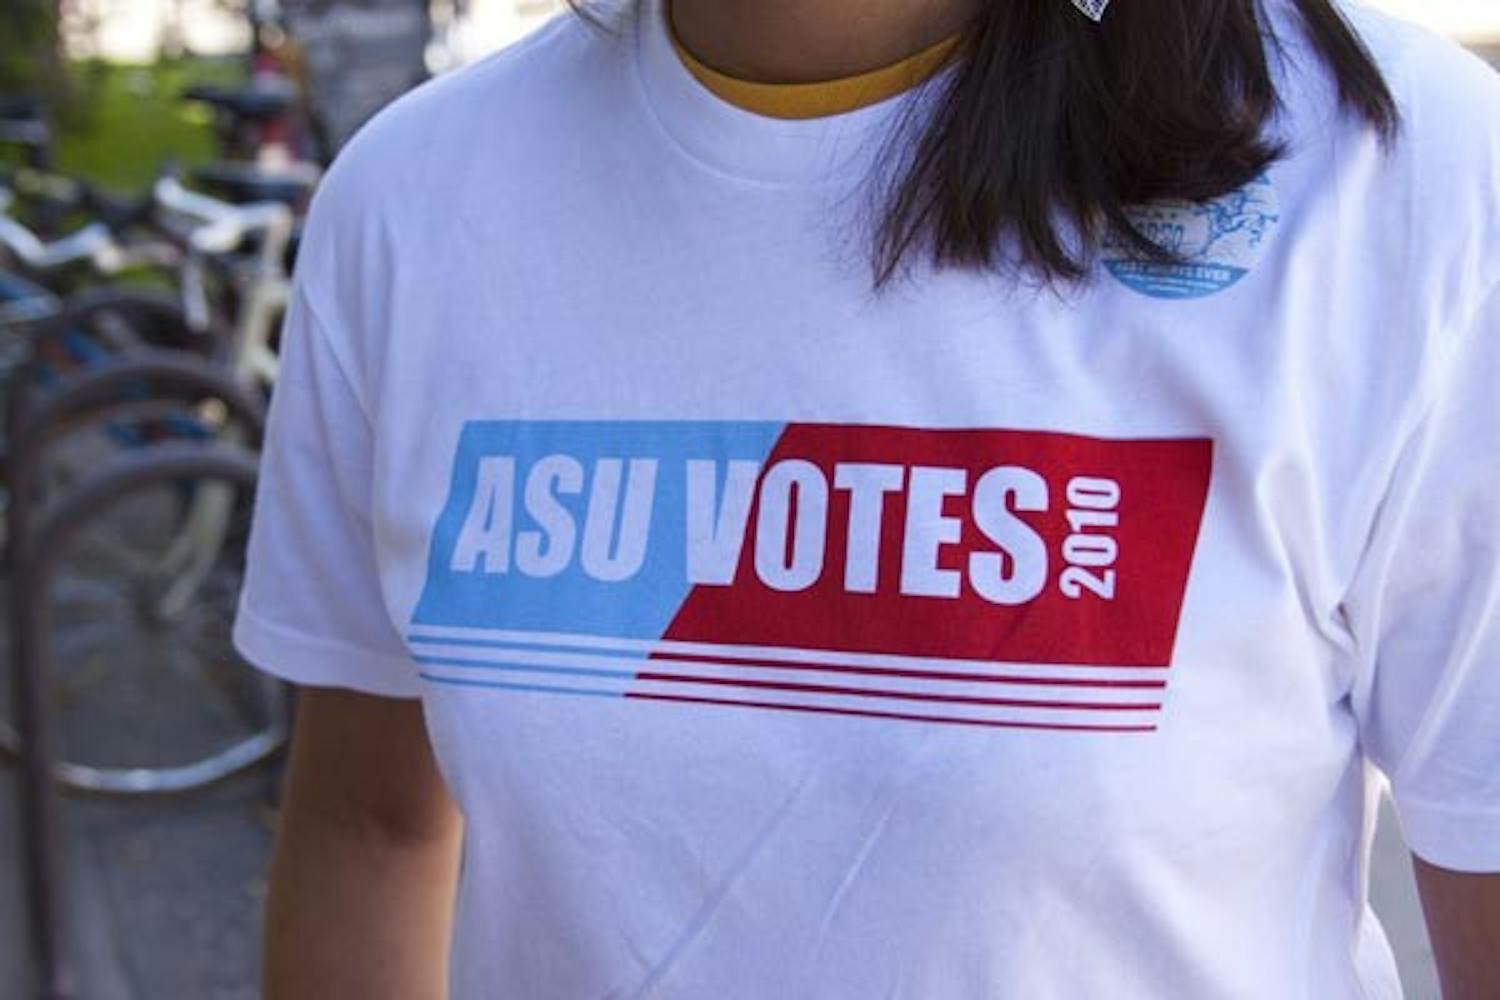 ASU VOTES : Campus politics